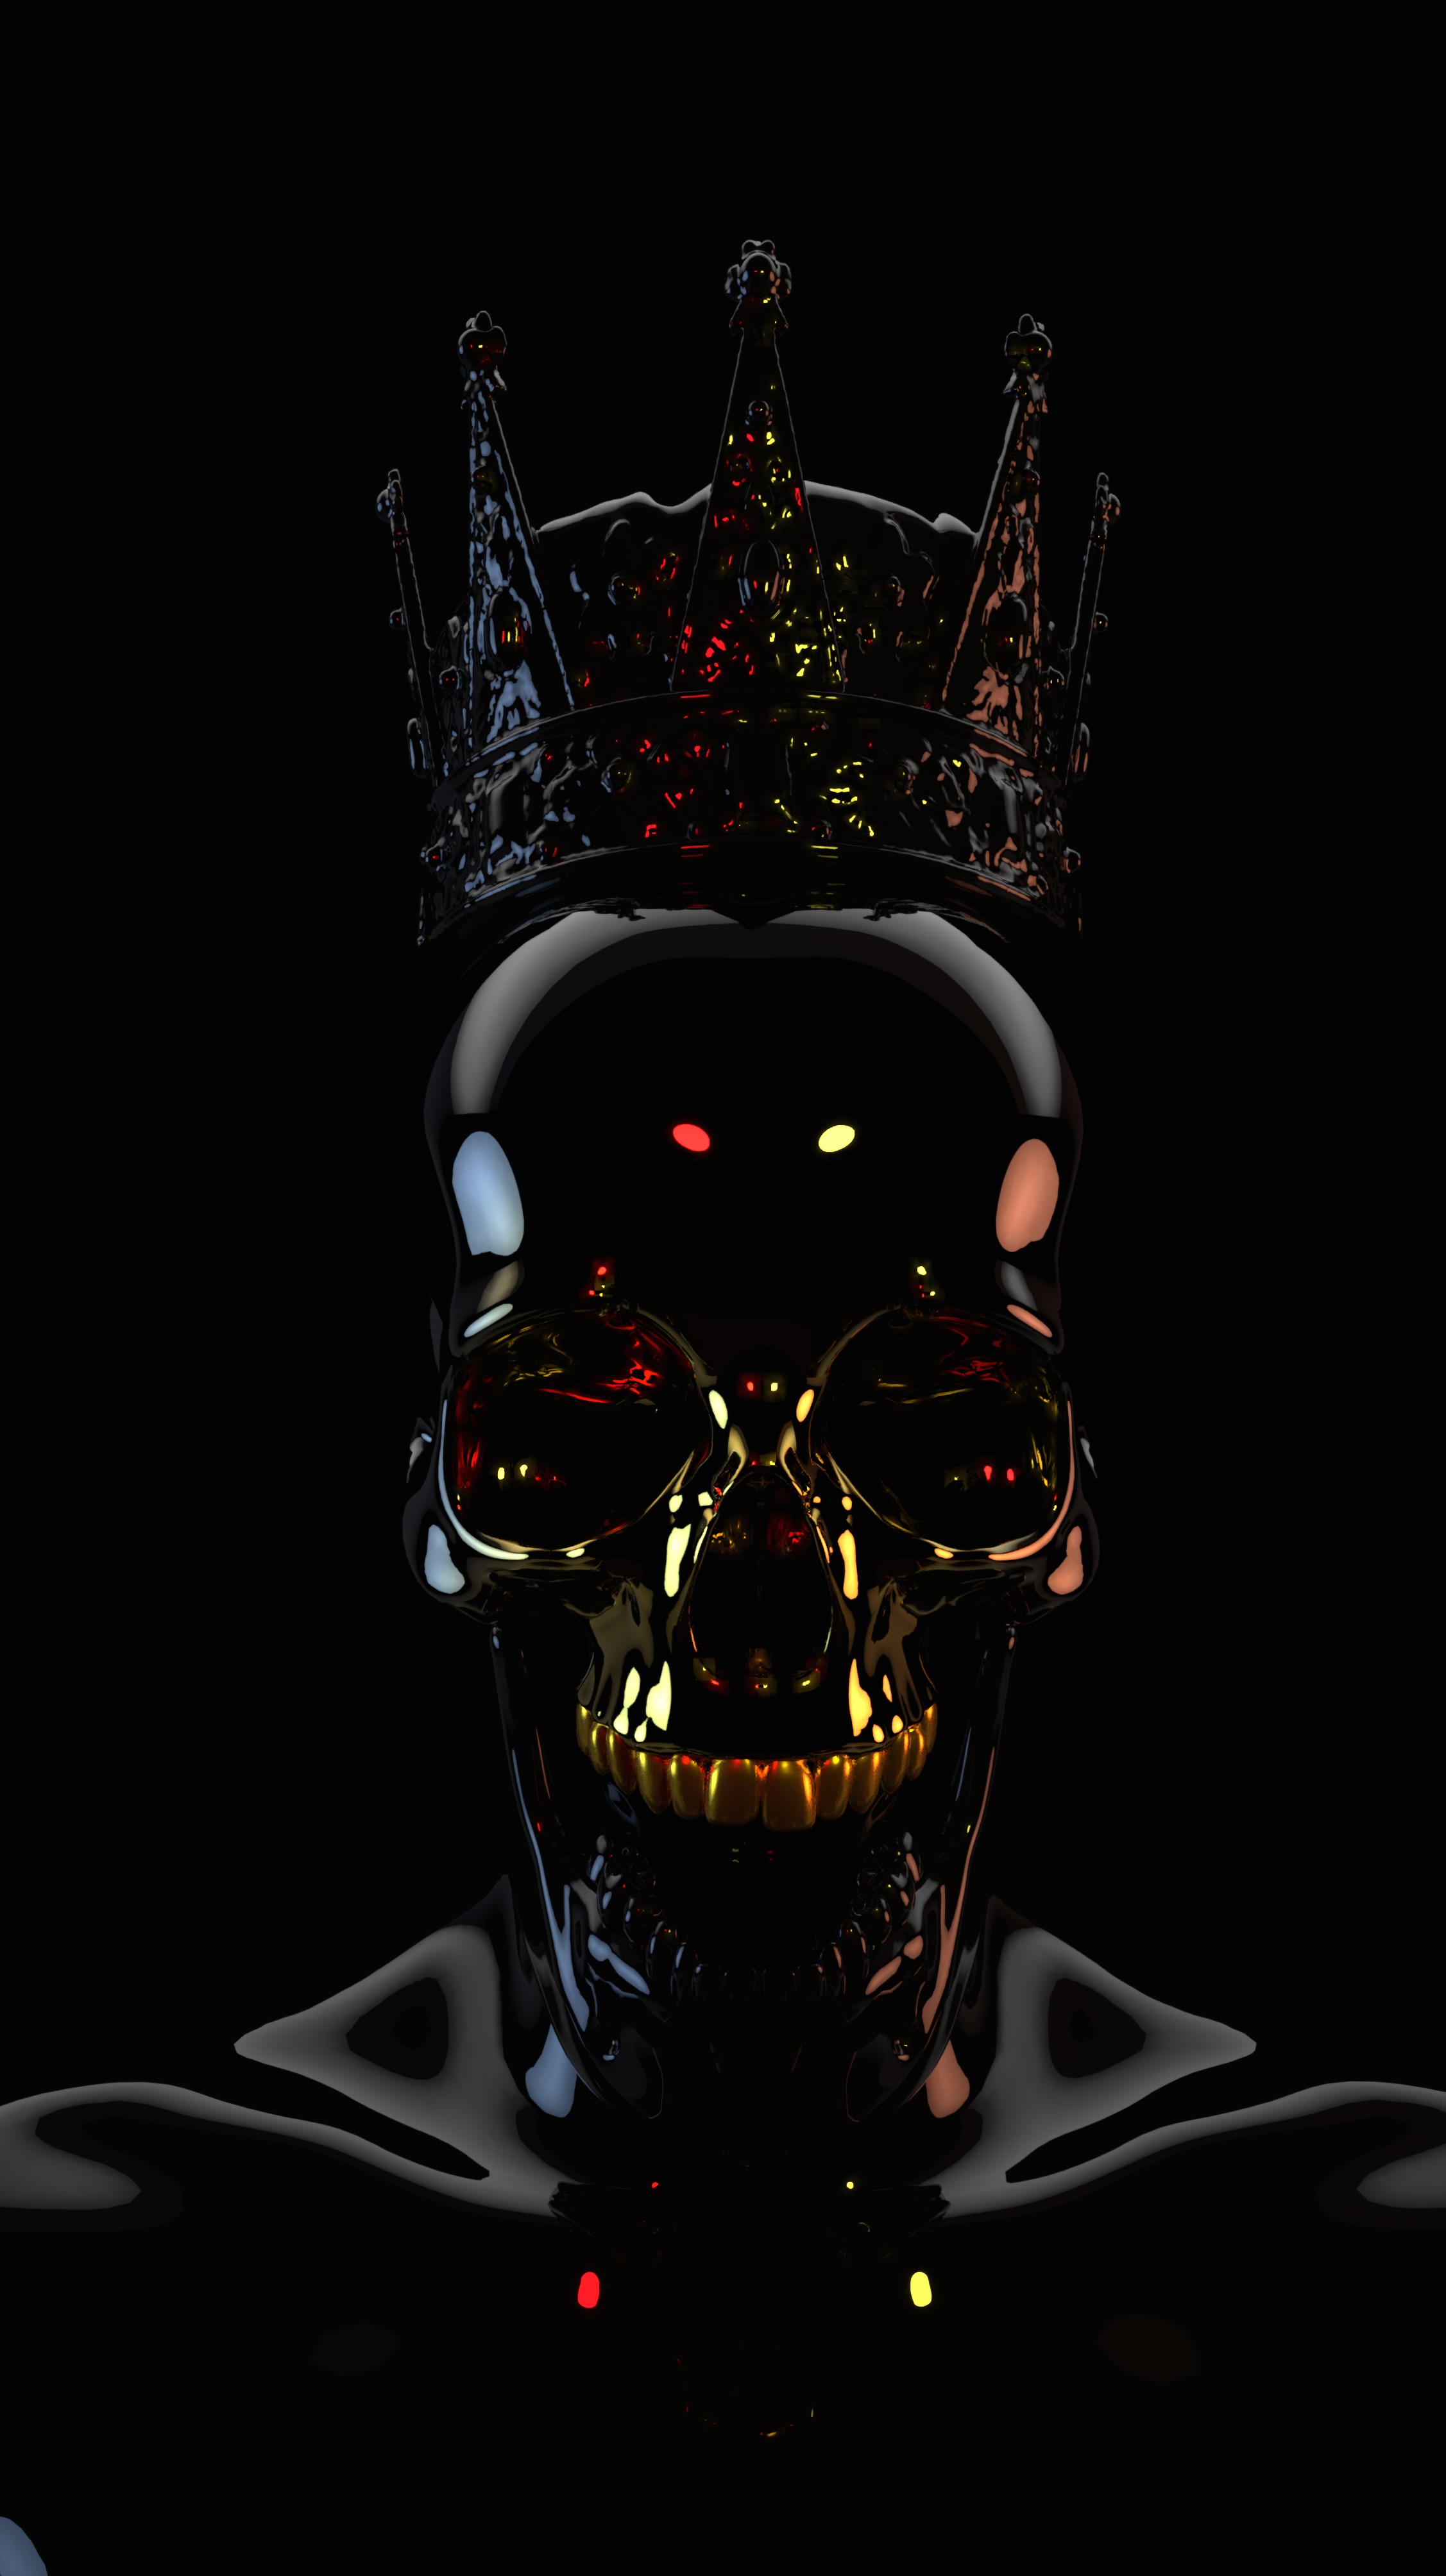 3d, dark, black, skull, crown